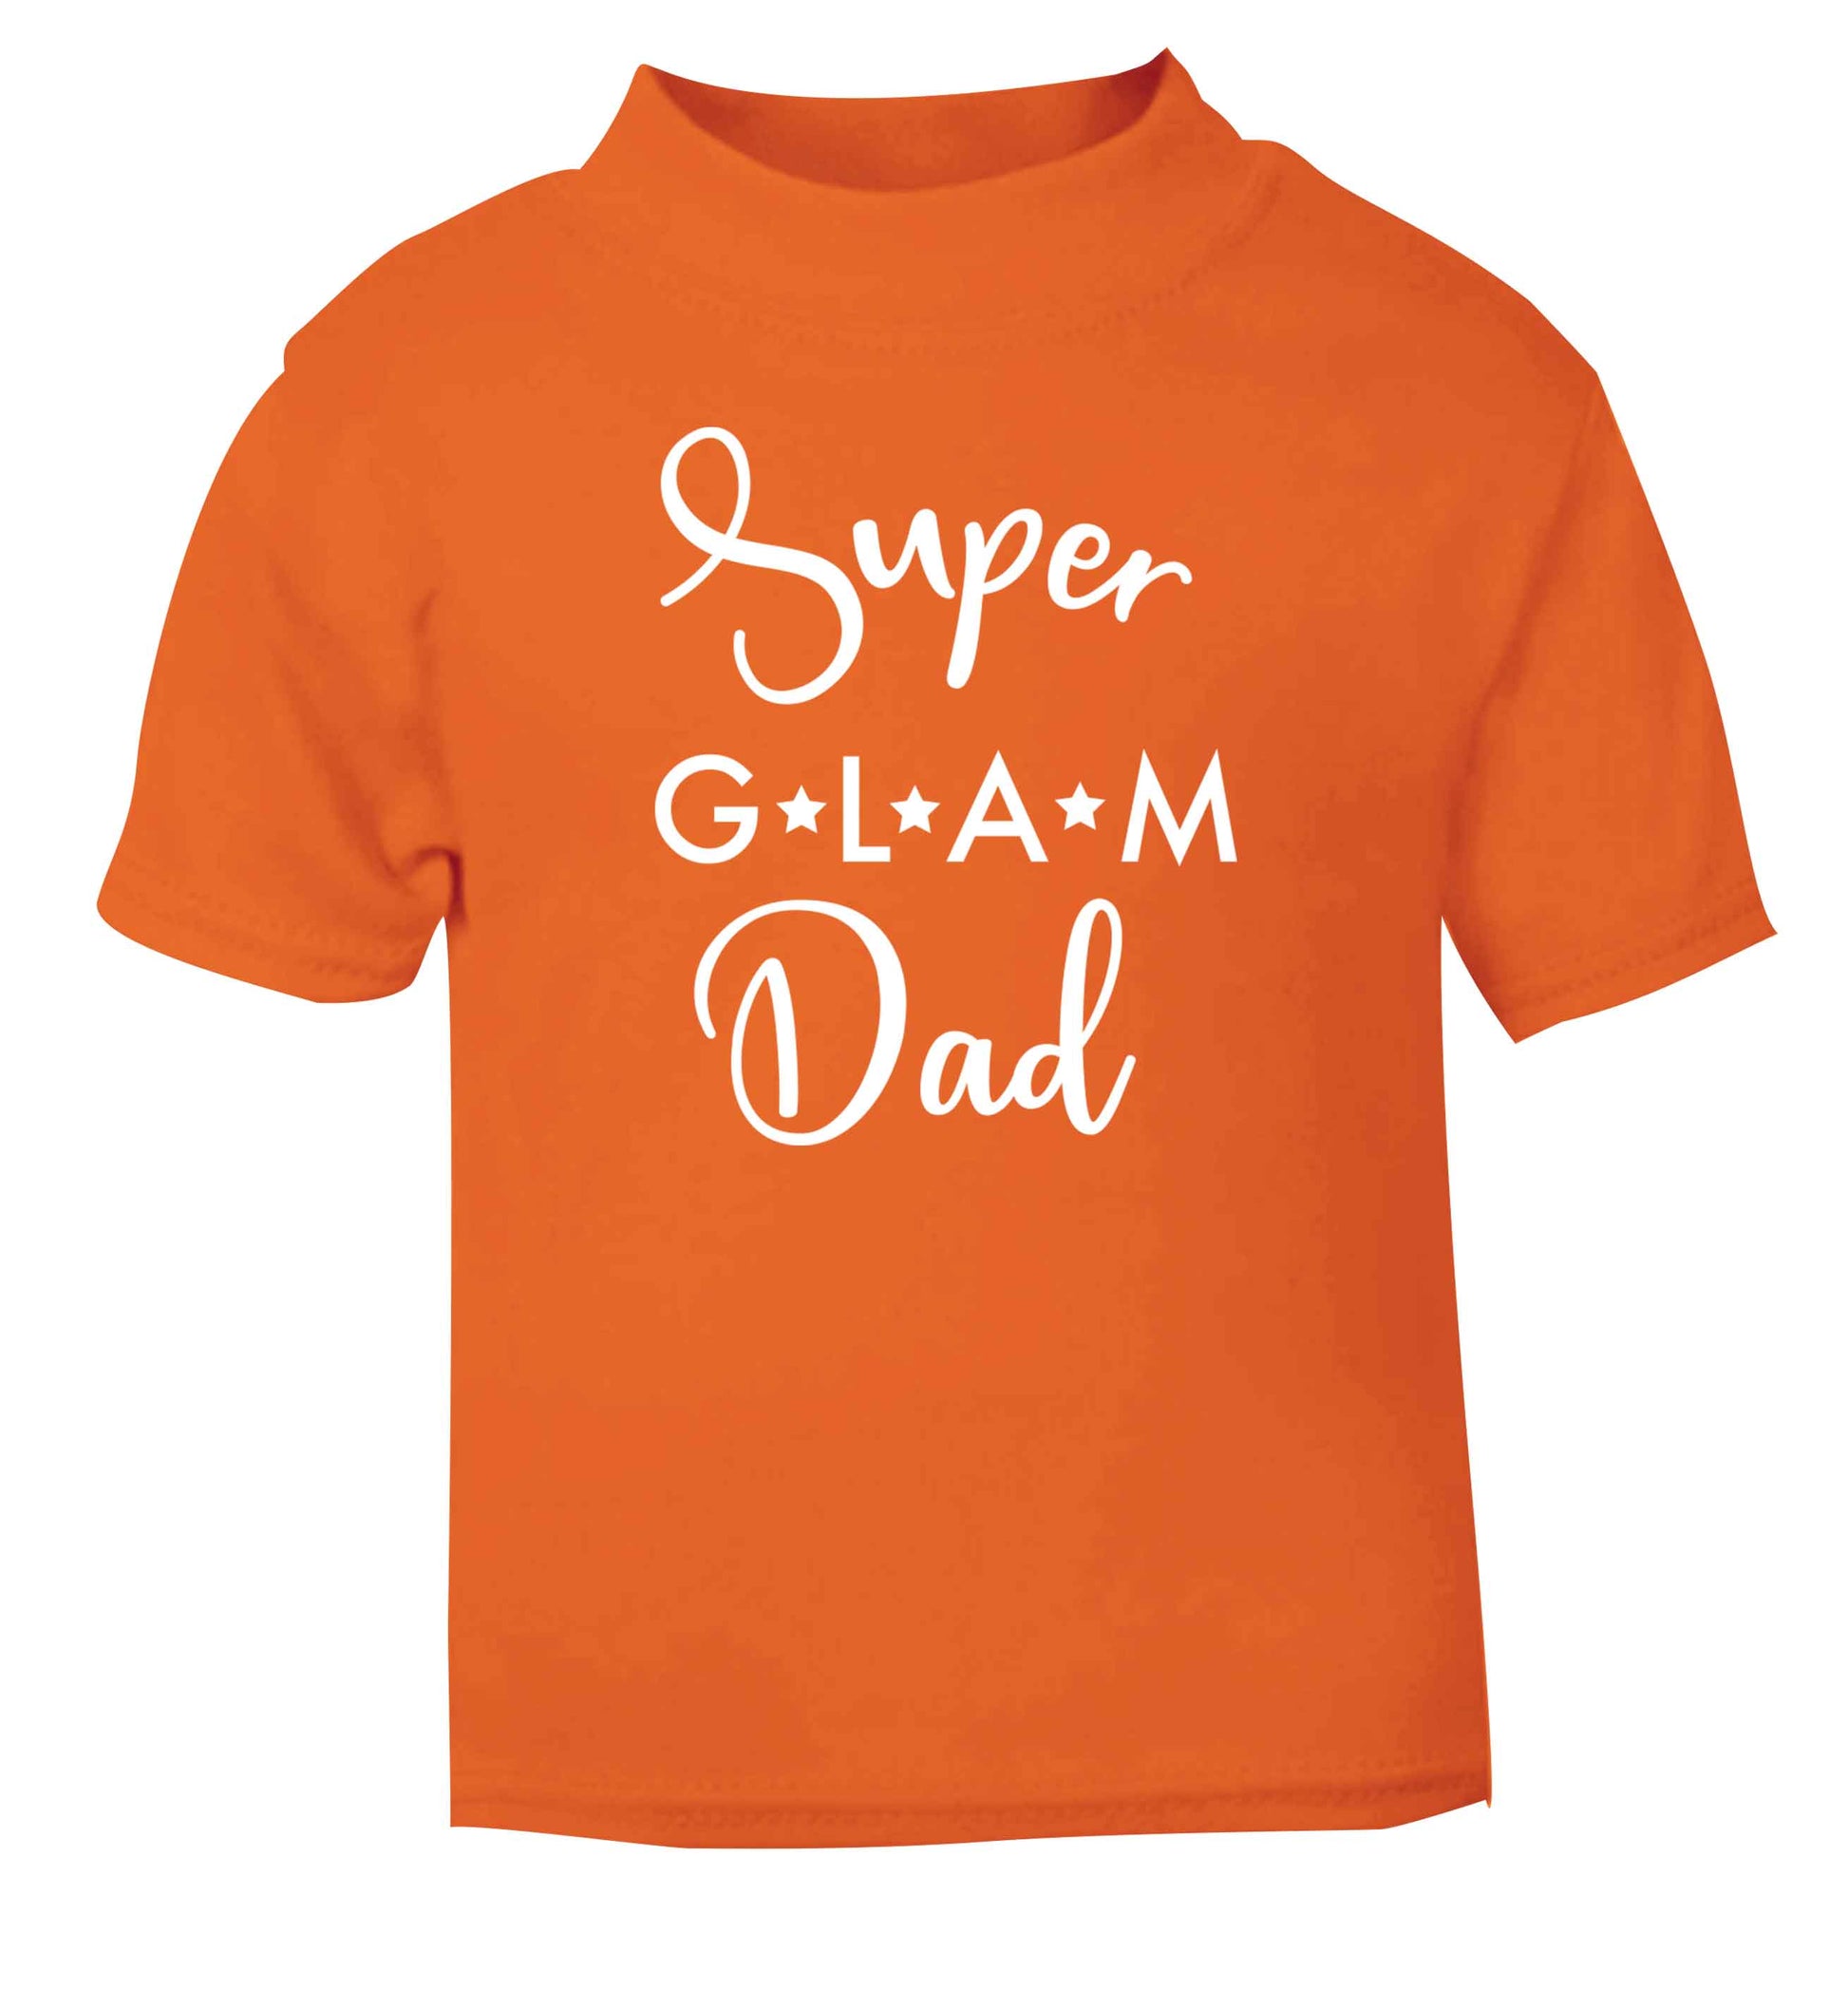 Super glam Dad orange Baby Toddler Tshirt 2 Years